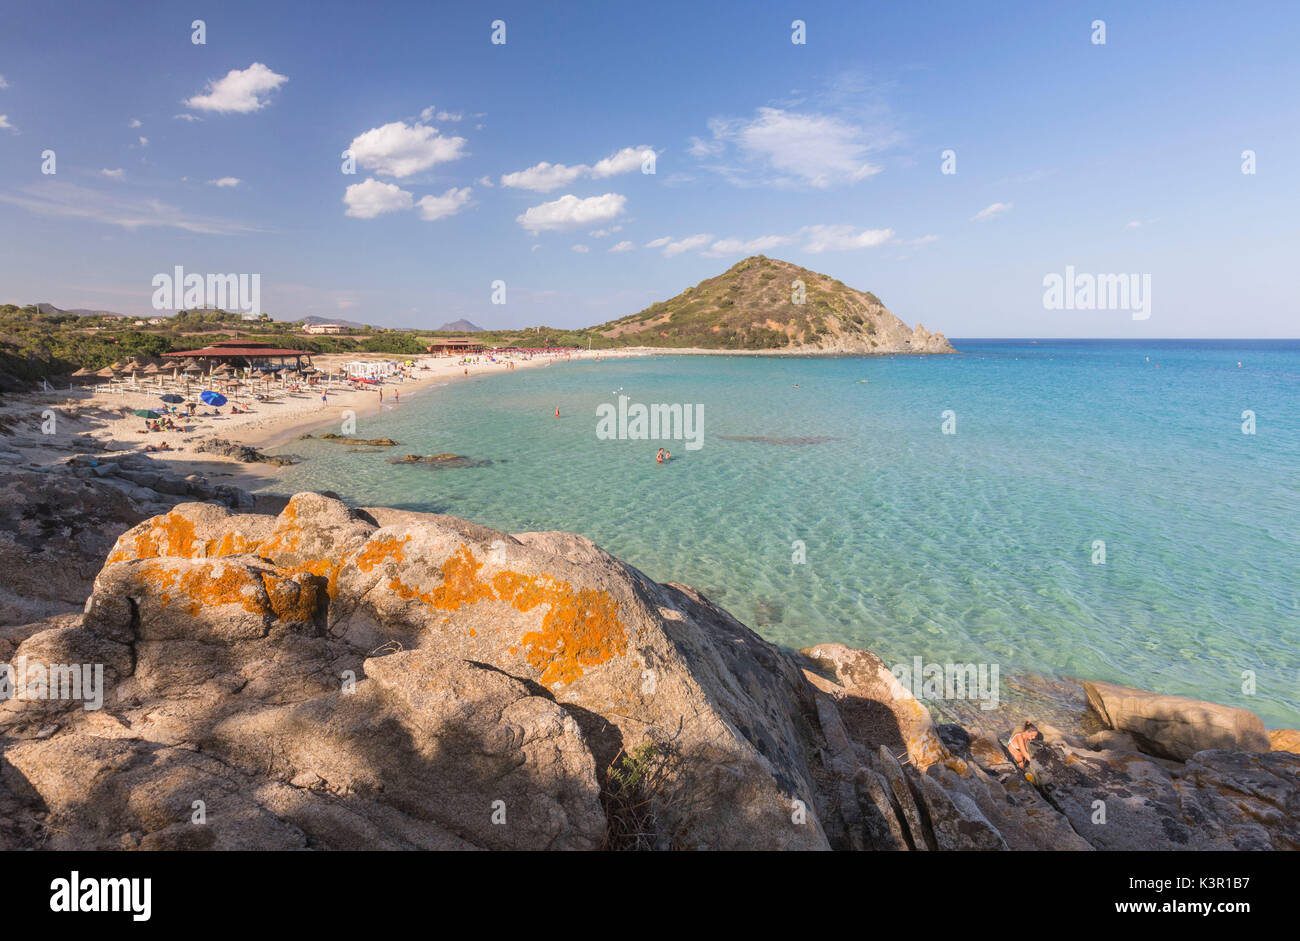 View of the turquoise sea and sandy beach surrounding the bay Cala Monte Turno Castiadas Cagliari Sardinia Italy Europe Stock Photo